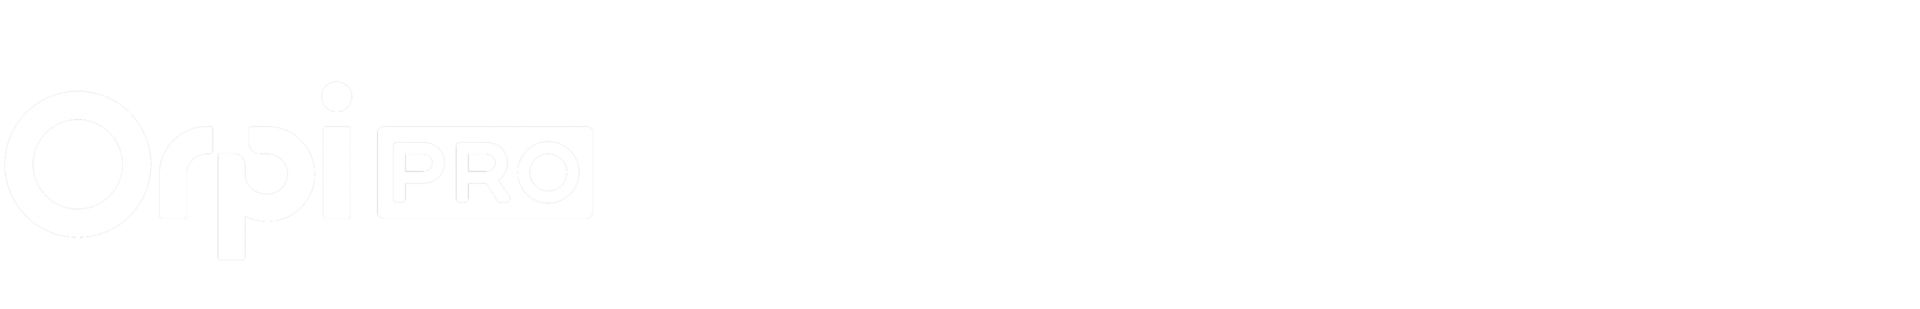 Logo orpi pro direct habitat reserve